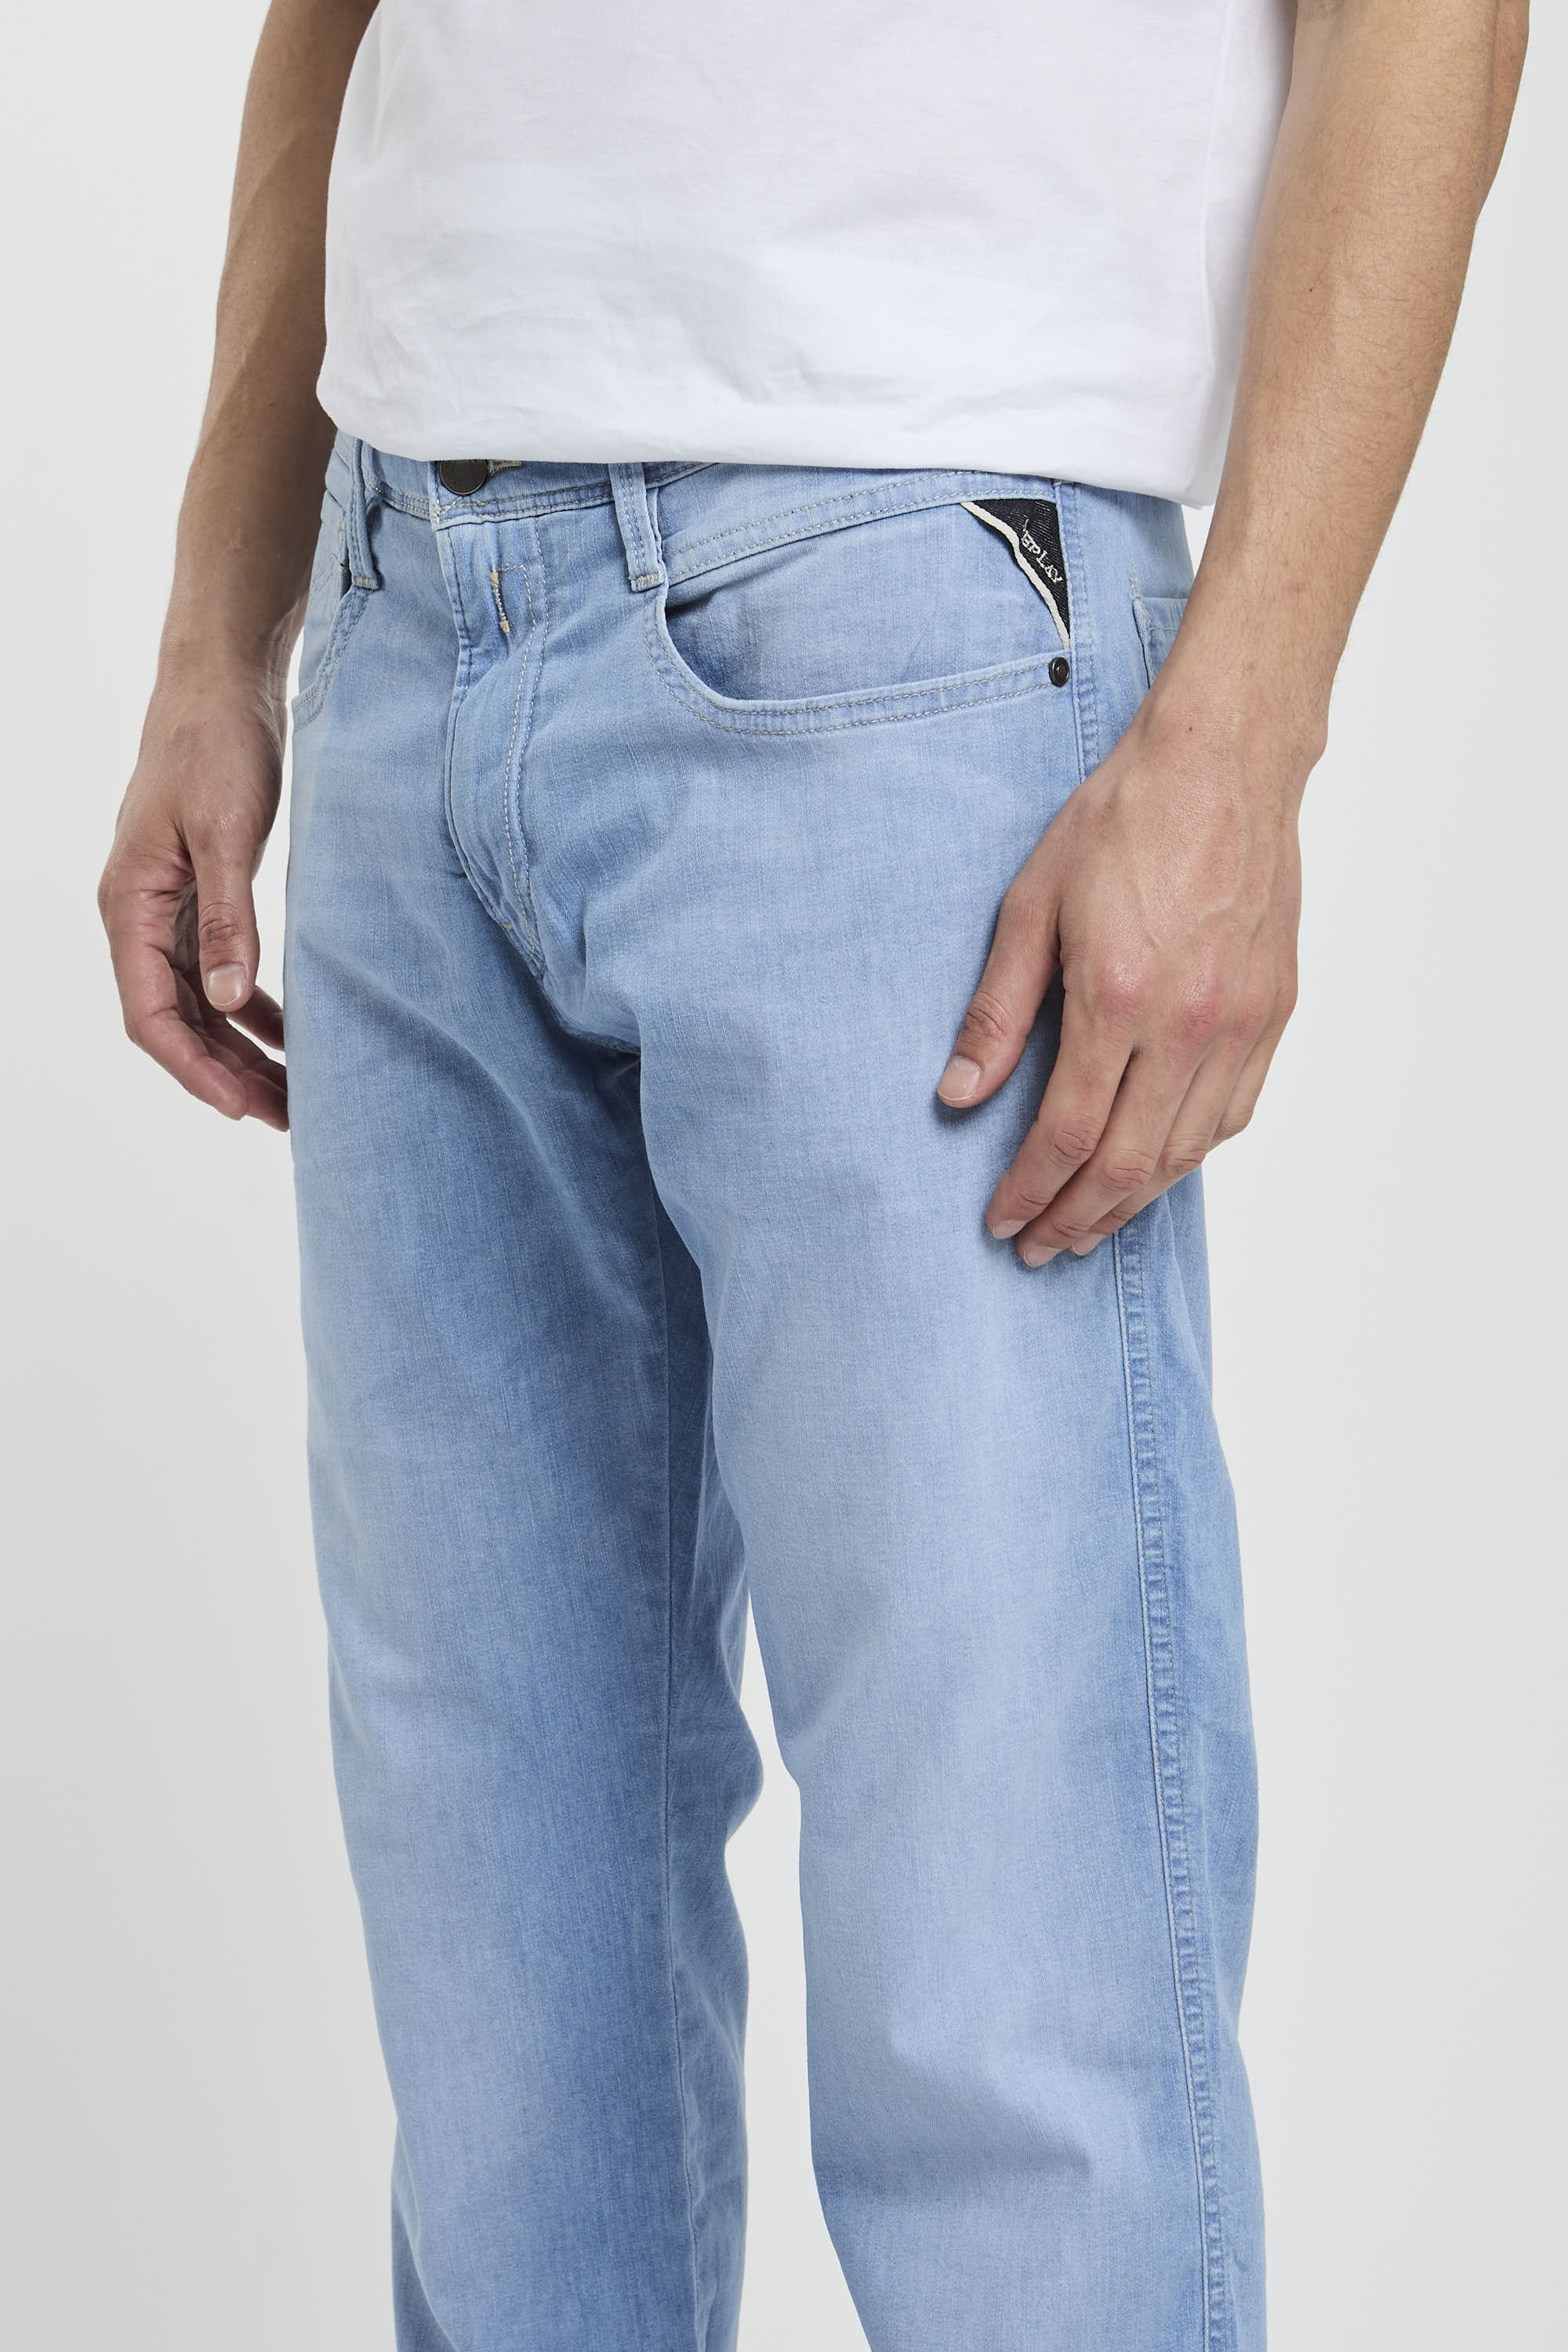 Replay Light Blue Slim Fit Jeans Cotton/Lyocell/Elastomultiester/Elastane-4